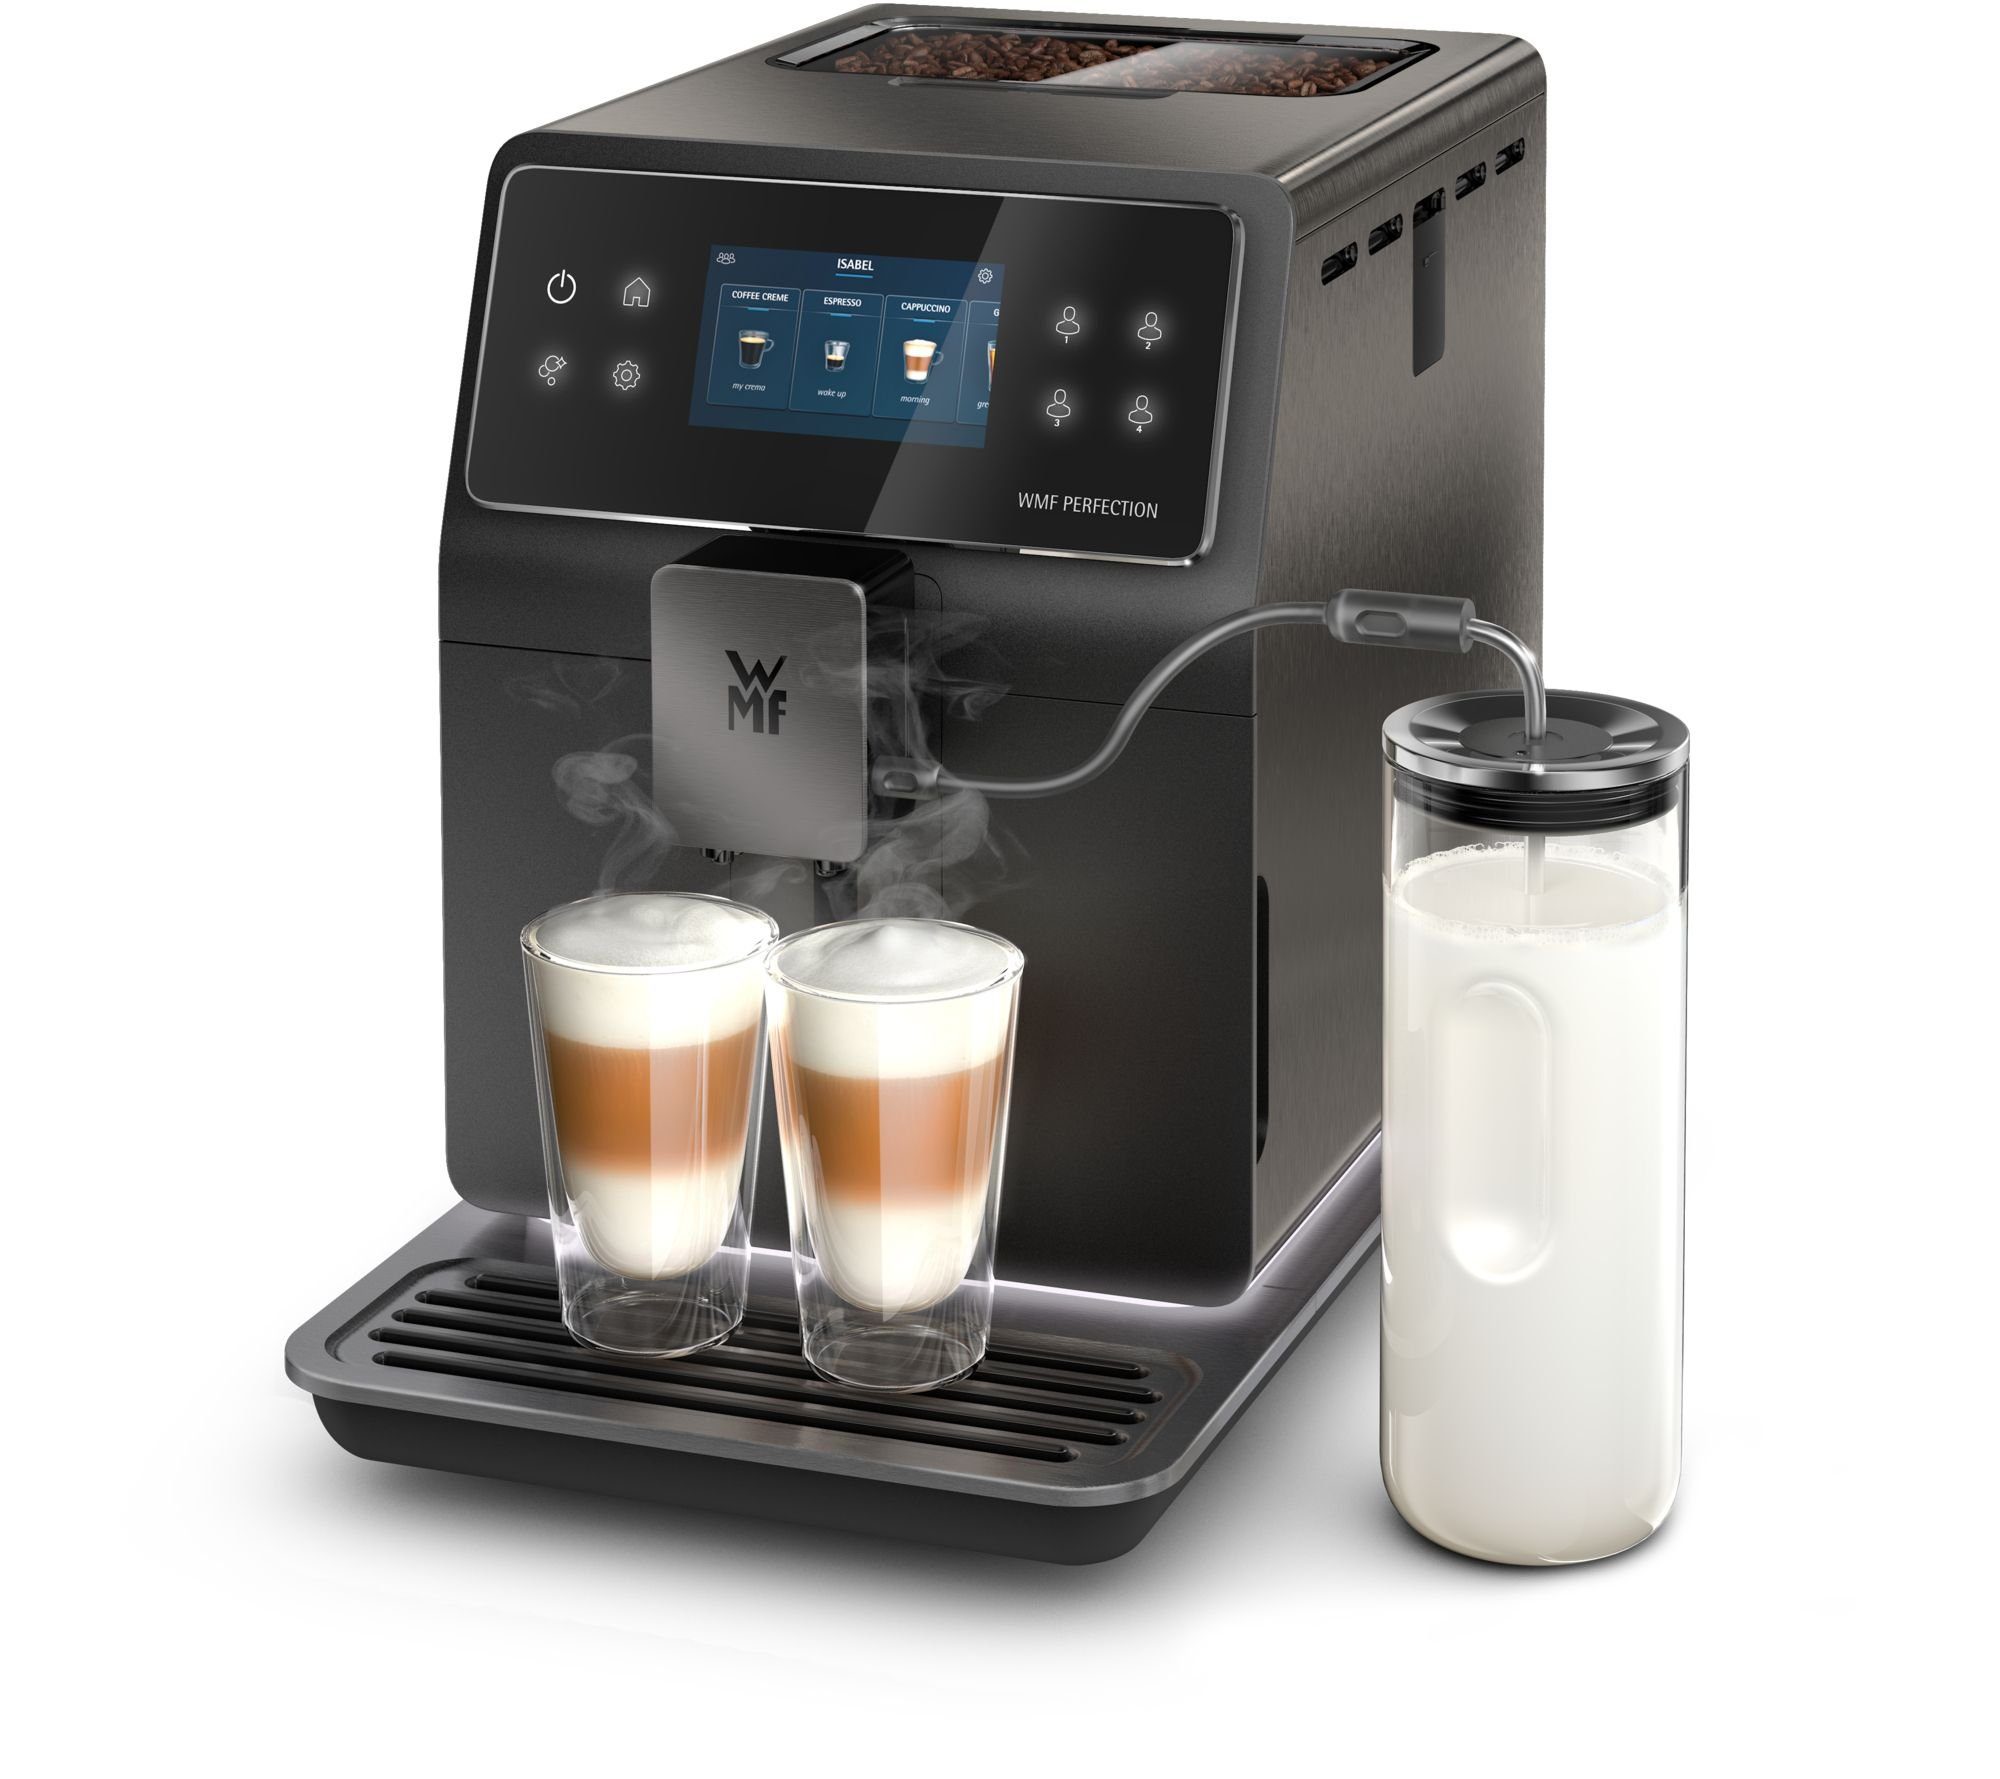 WMF Kaffeevollautomat Perfection, mit Milchsystem, 18 Getränkespezialitäten, Edelstahl-Mahlwerk